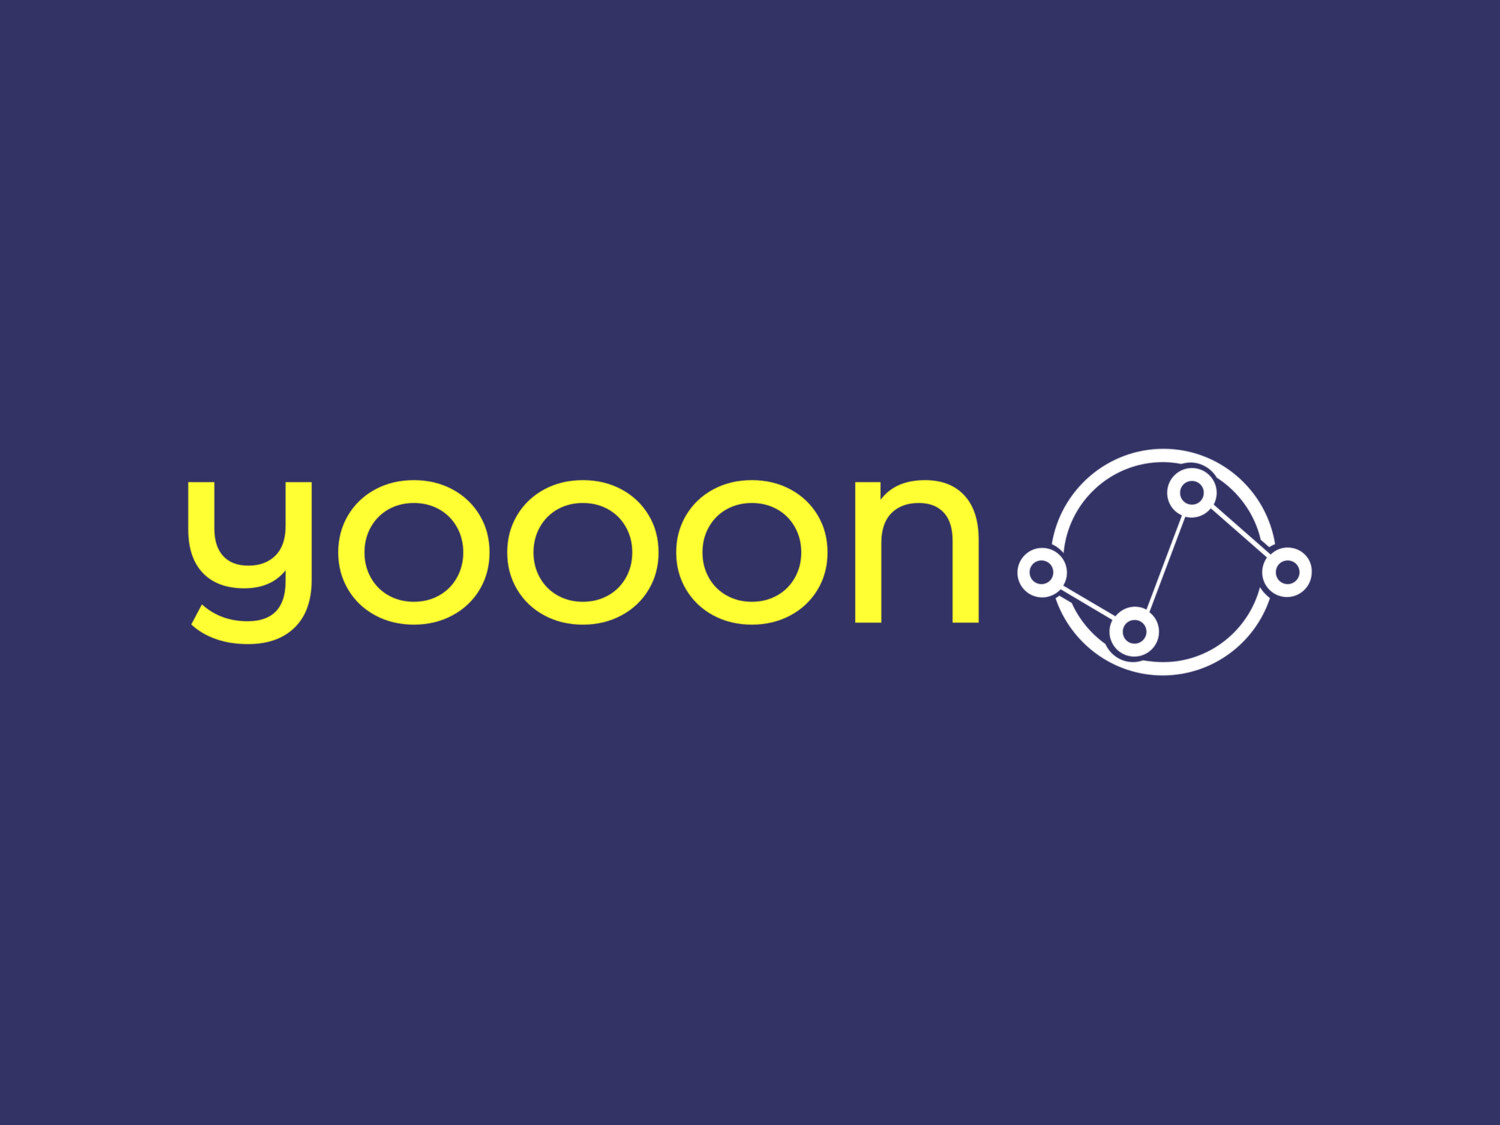 yooon.com